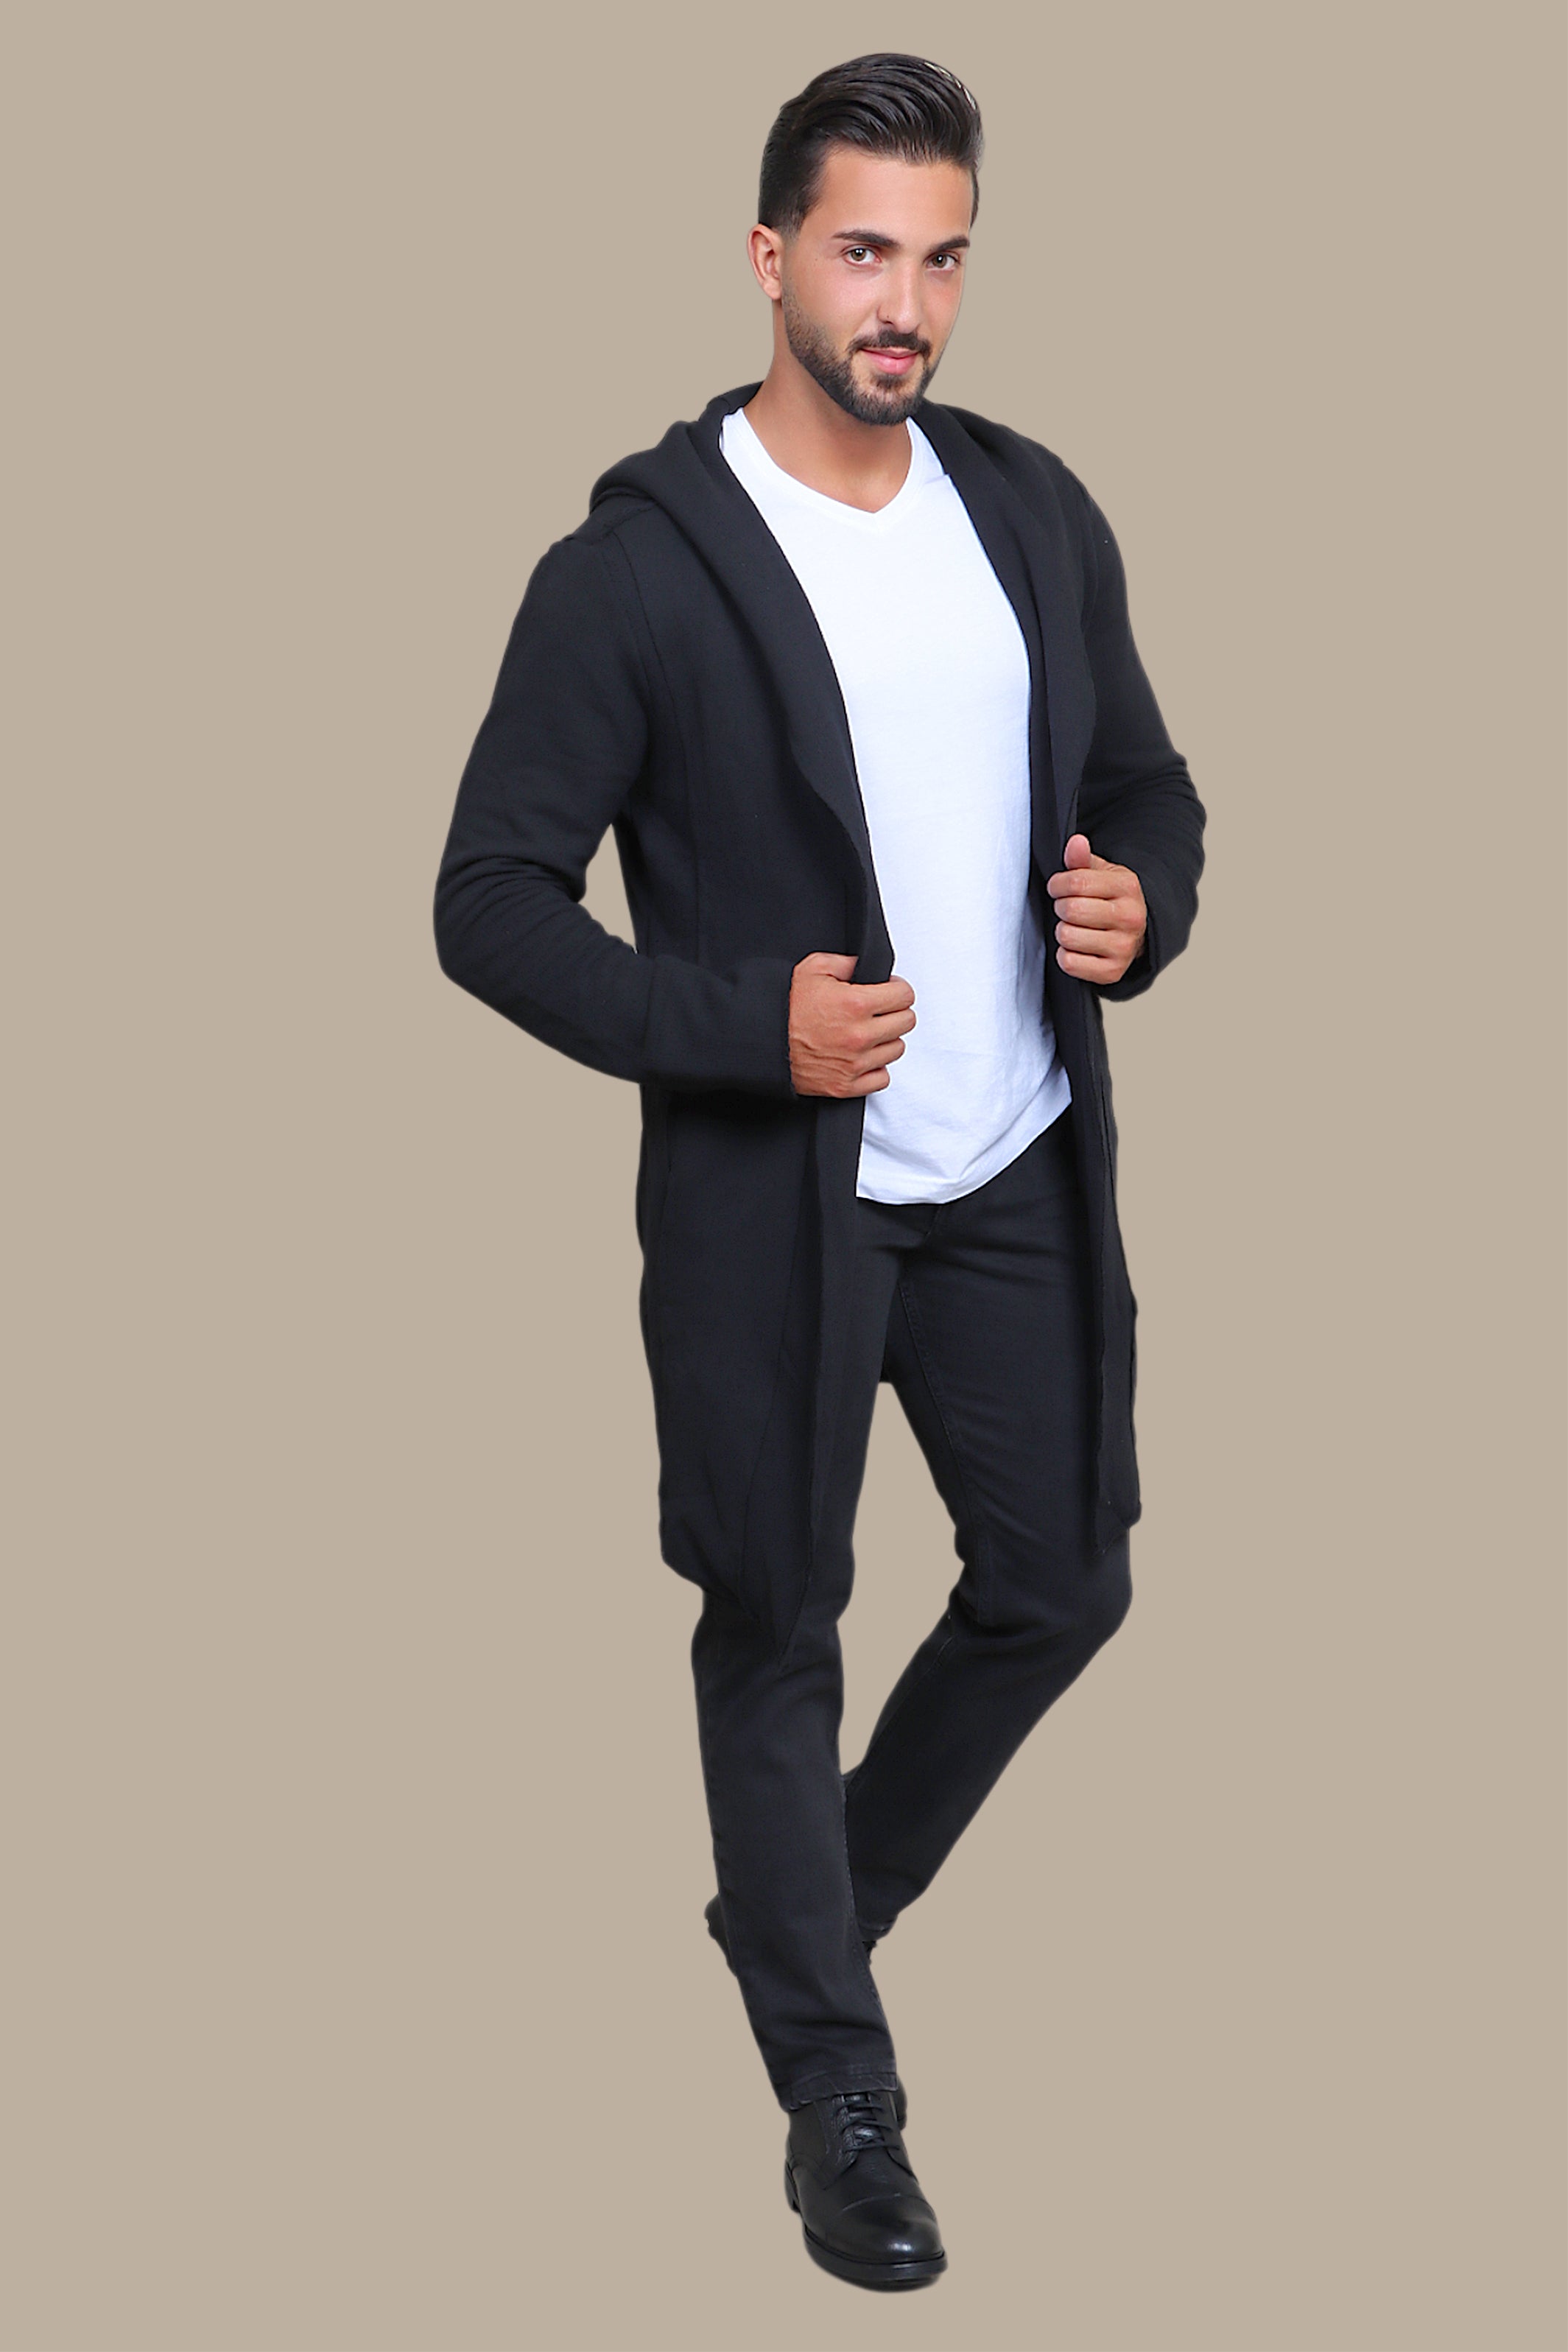 Chic Black Long Cardigan Jacket: Effortless Elegance for Every Occasion